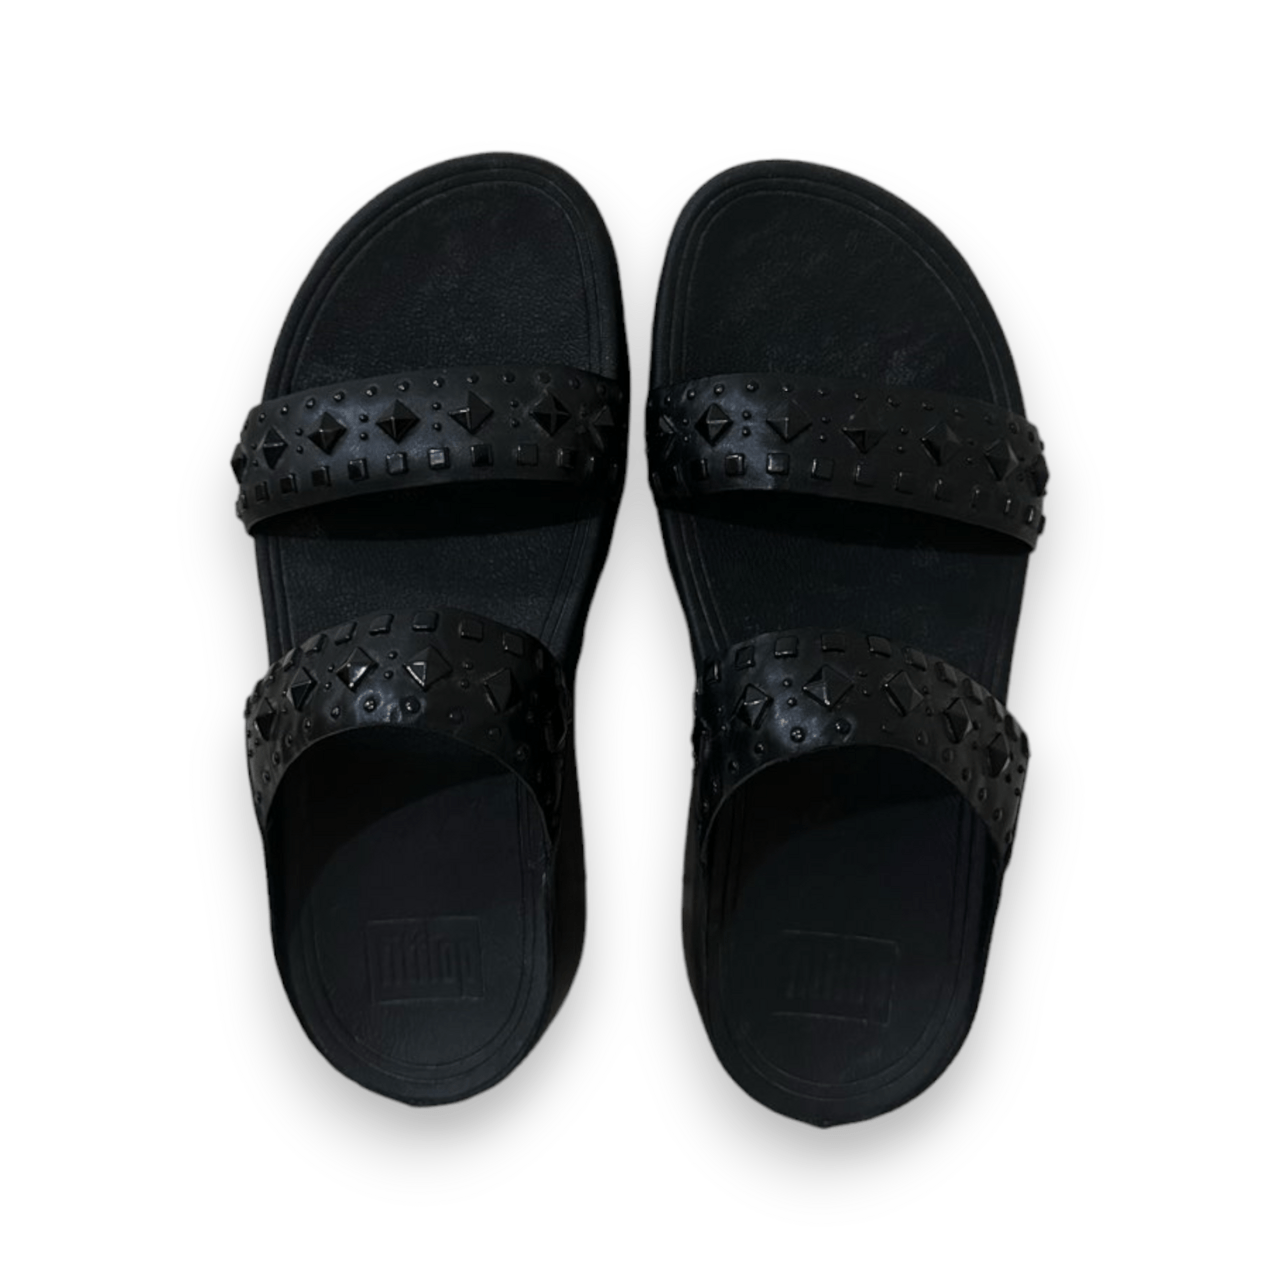 Fitflop Black Stud Sandals 